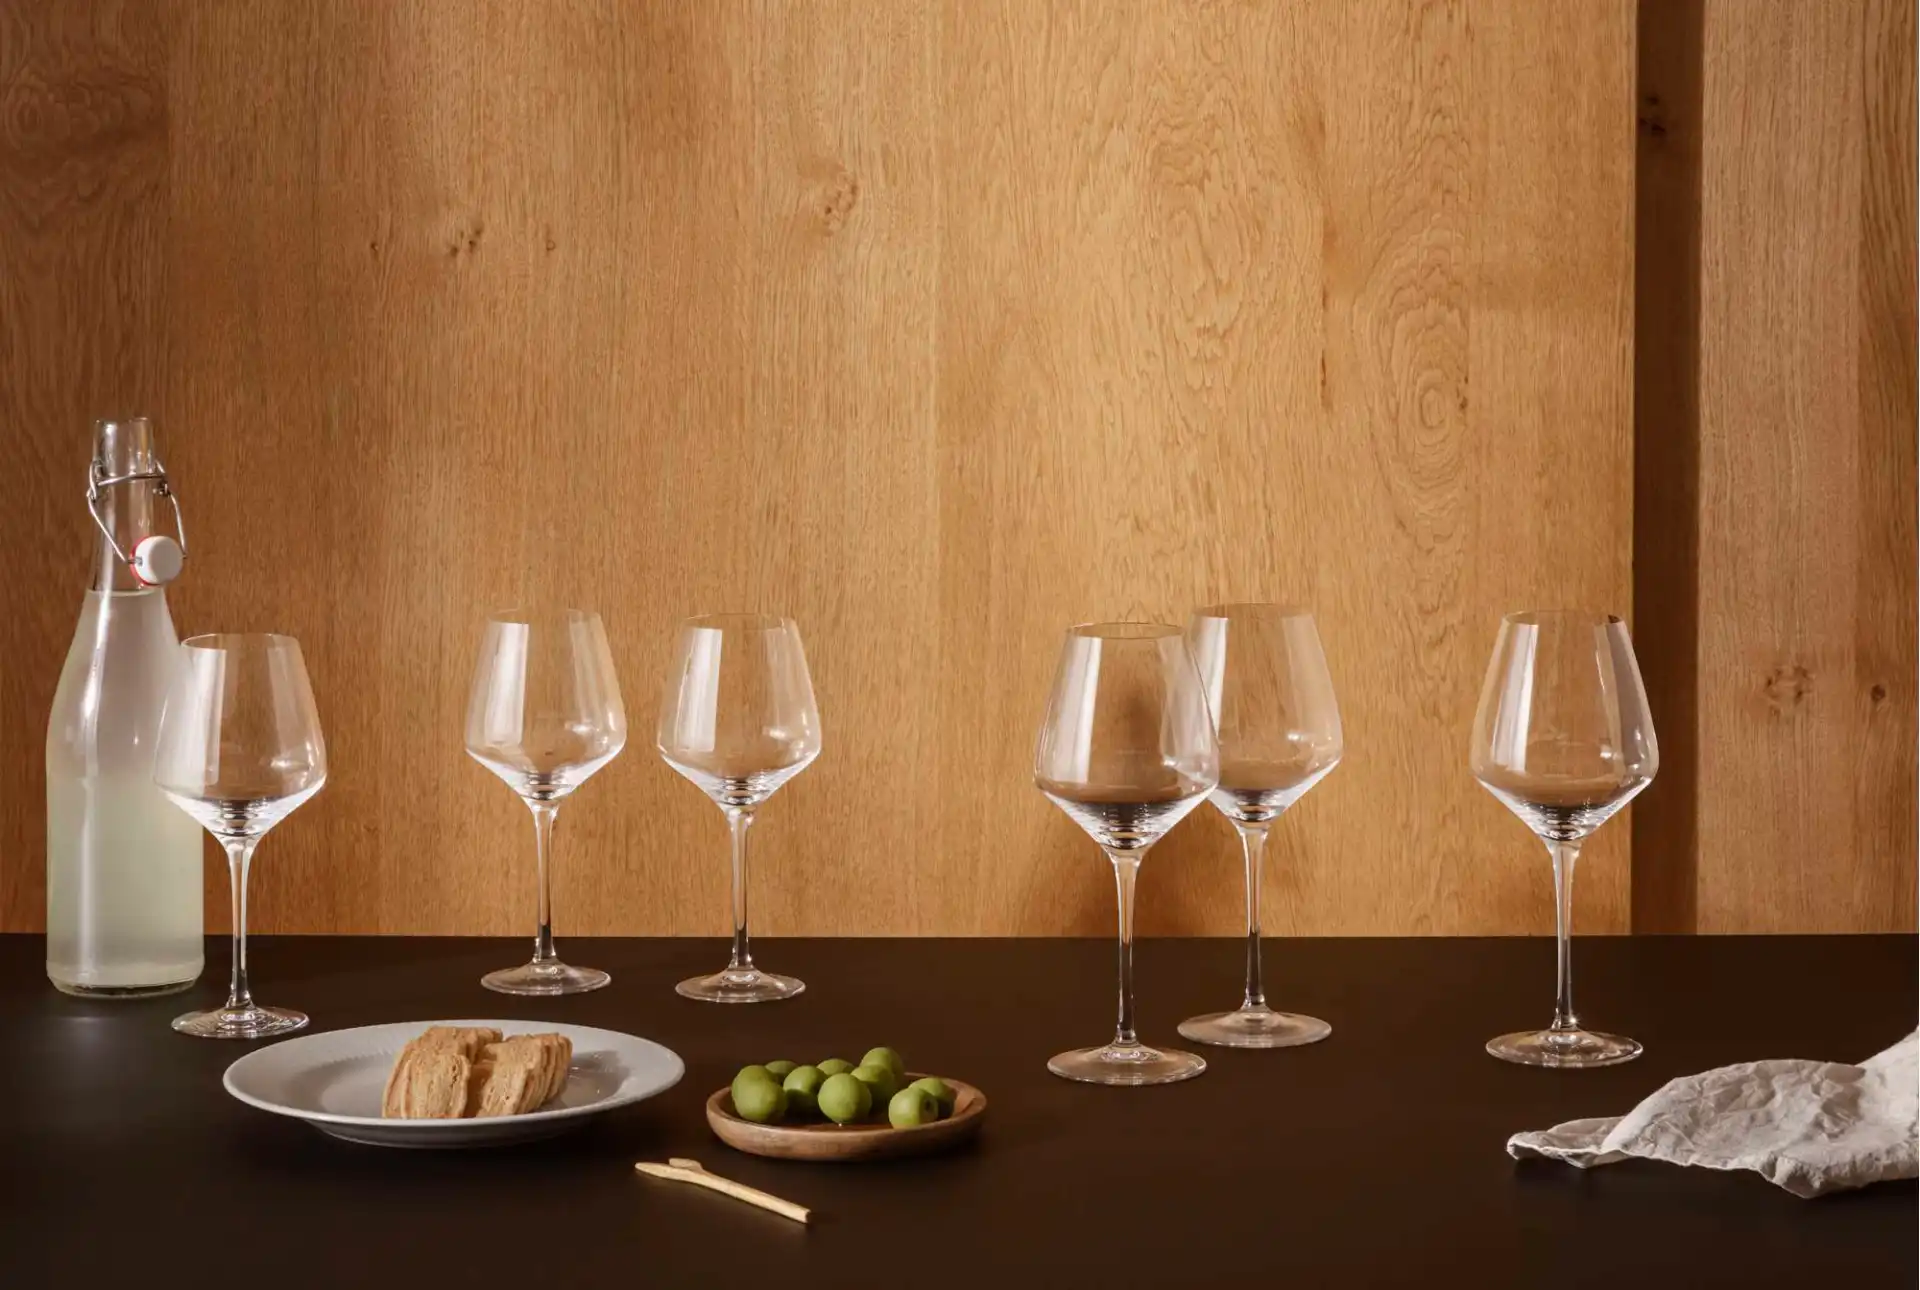 541201-541205-legio-nova-wine-glasses-redwine-whitewine-noalco-table-l-b2b2023.webp